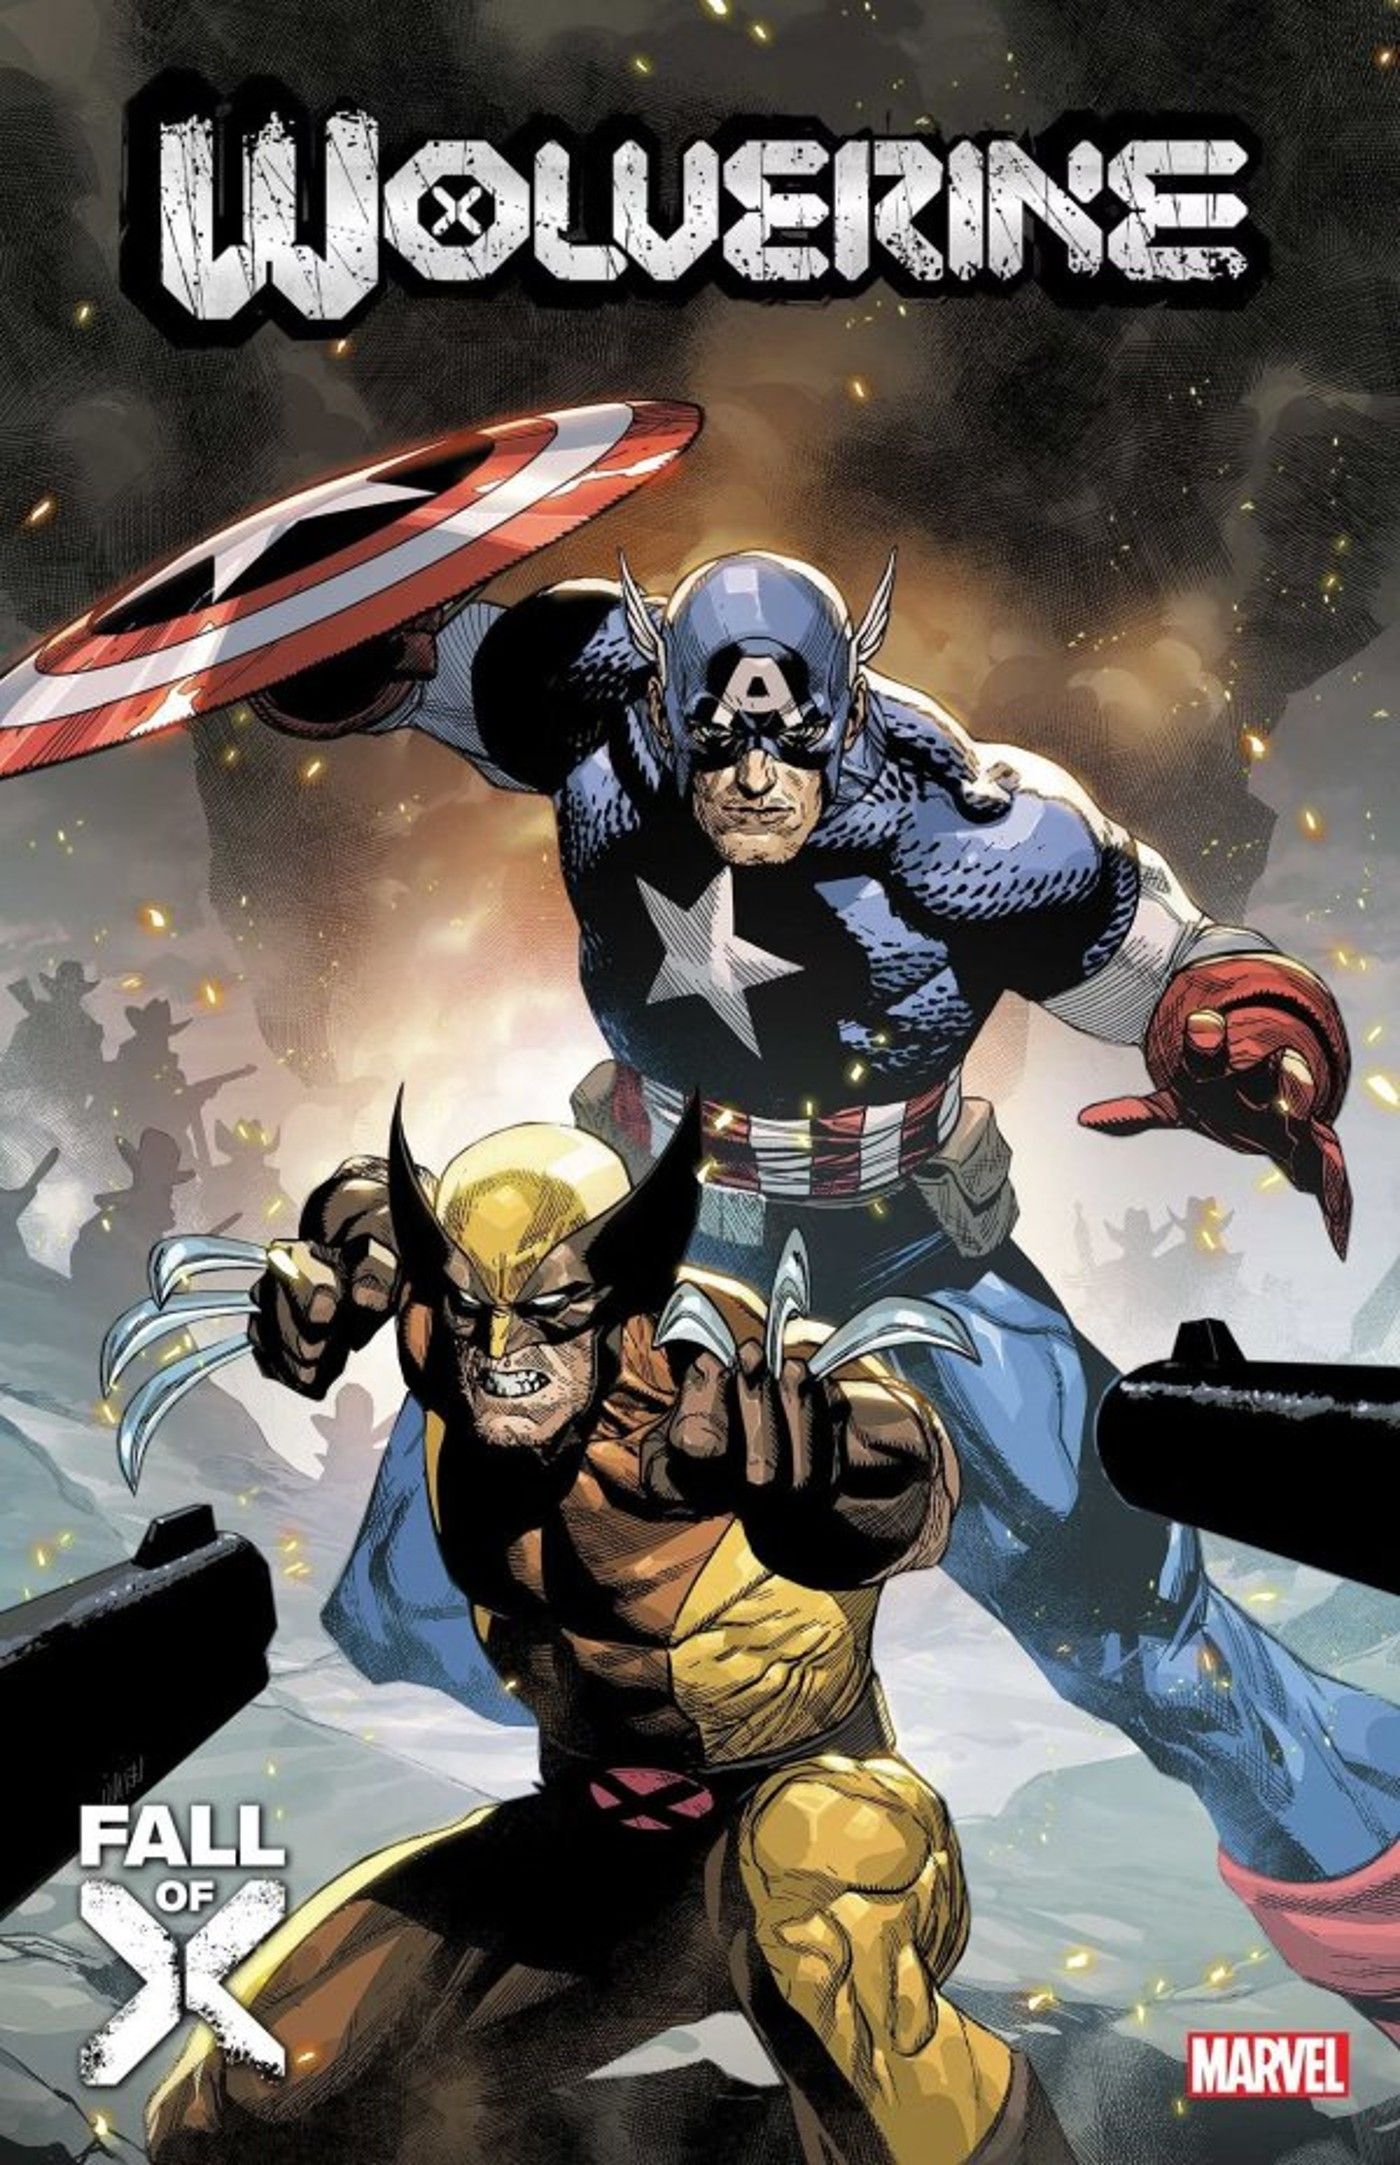 Wolverine & Captain America’s New Team-Up Redefines Their Friendship